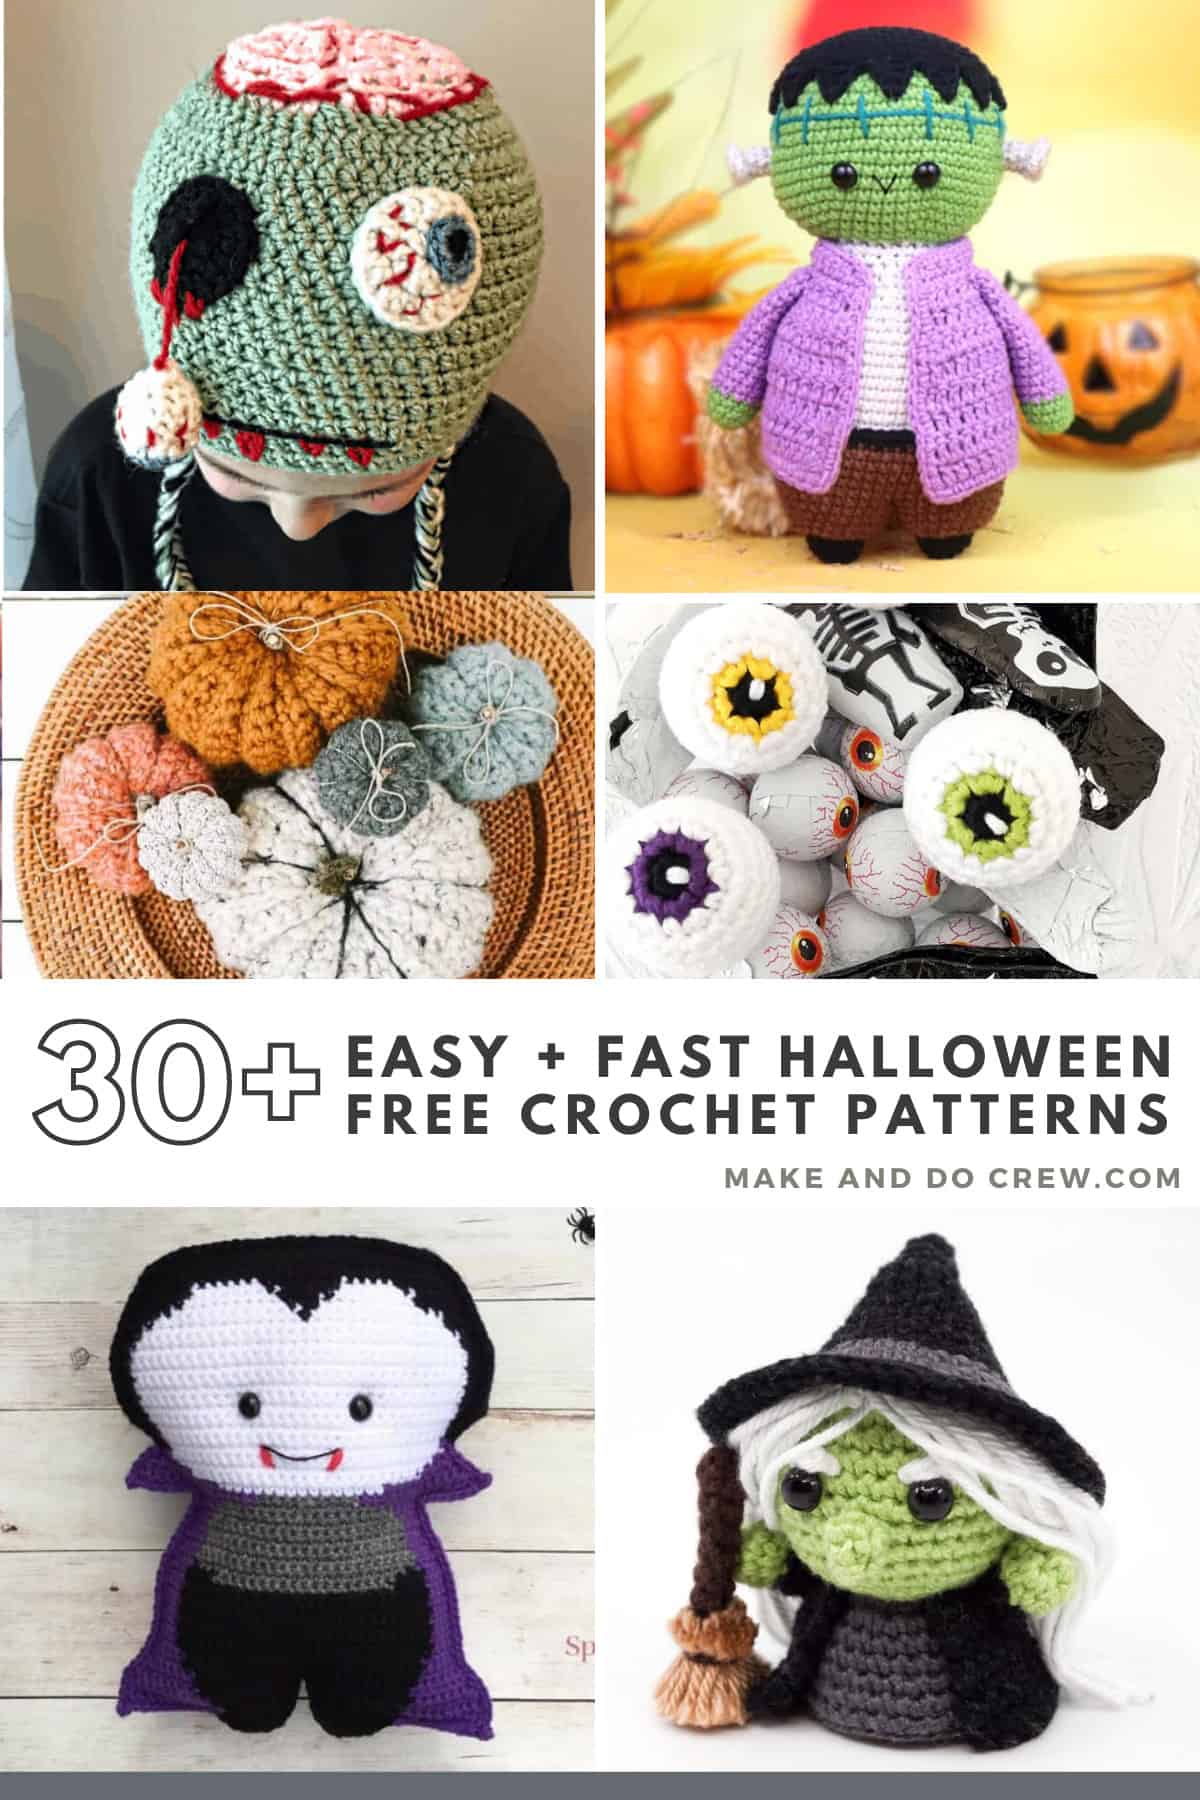 Grid of Halloween crochet amigurumi including a witch, vampire, eyeballs, frankenstein doll and pumpkins.